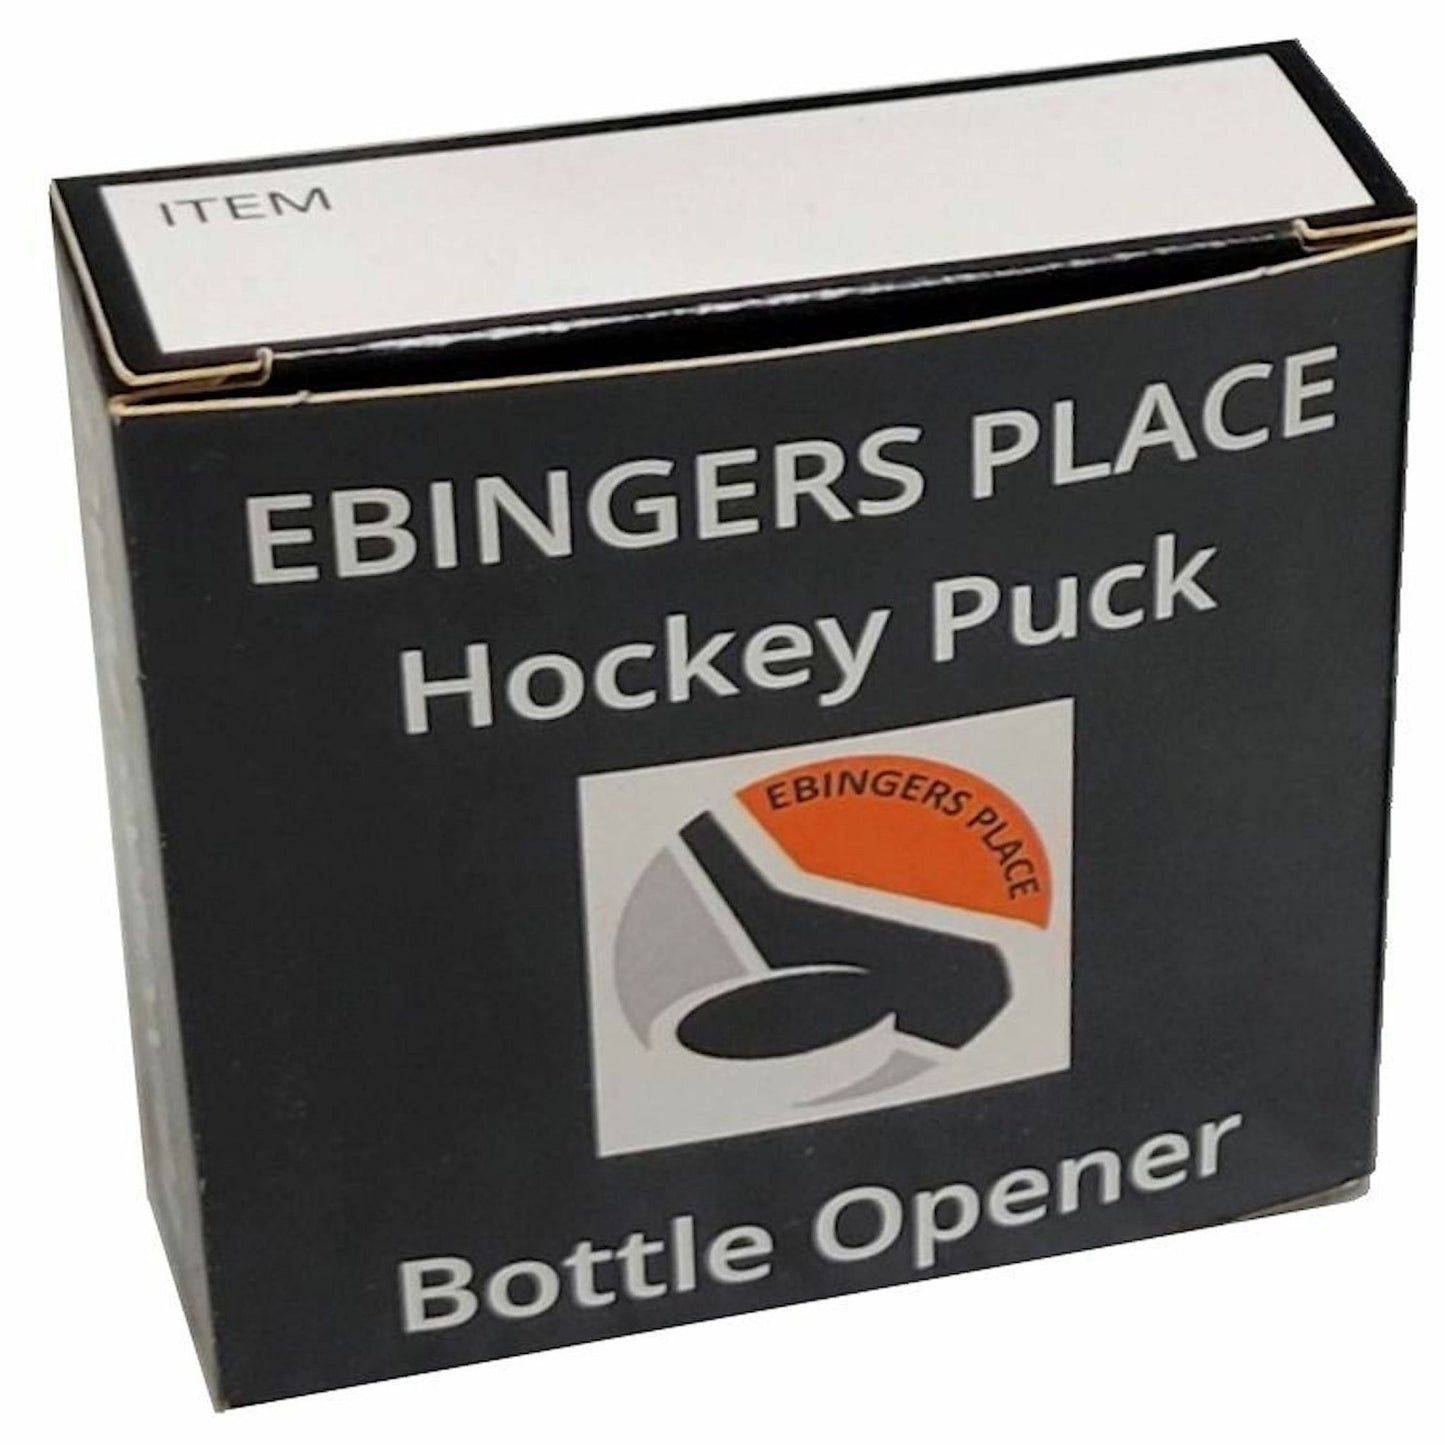 Washington Capitals Mascot Slapshot Hockey Puck Bottle Opener